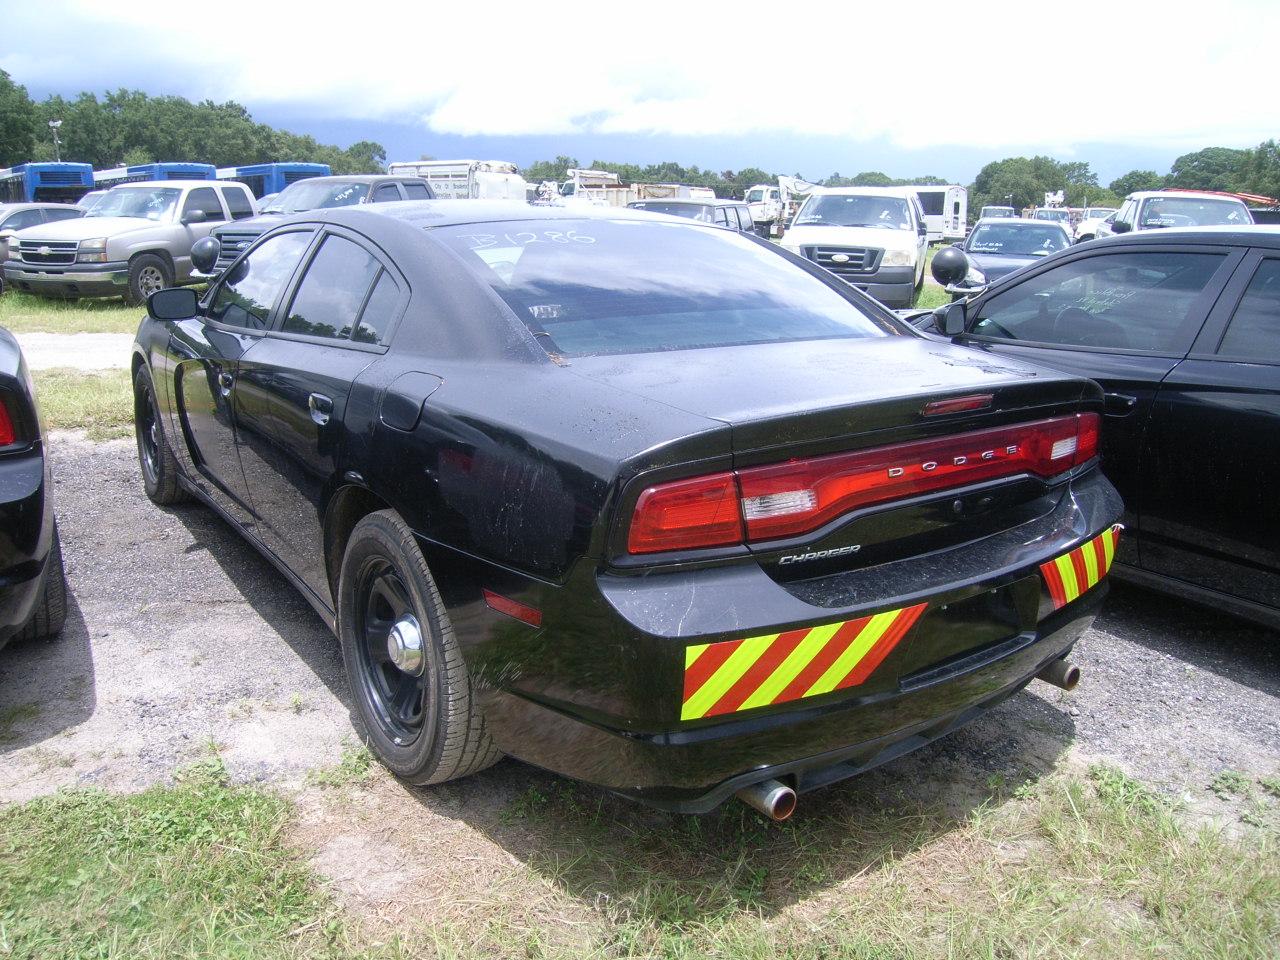 8-06125 (Cars-Sedan 4D)  Seller:Florida State FHP 2013 DODG CHARGER